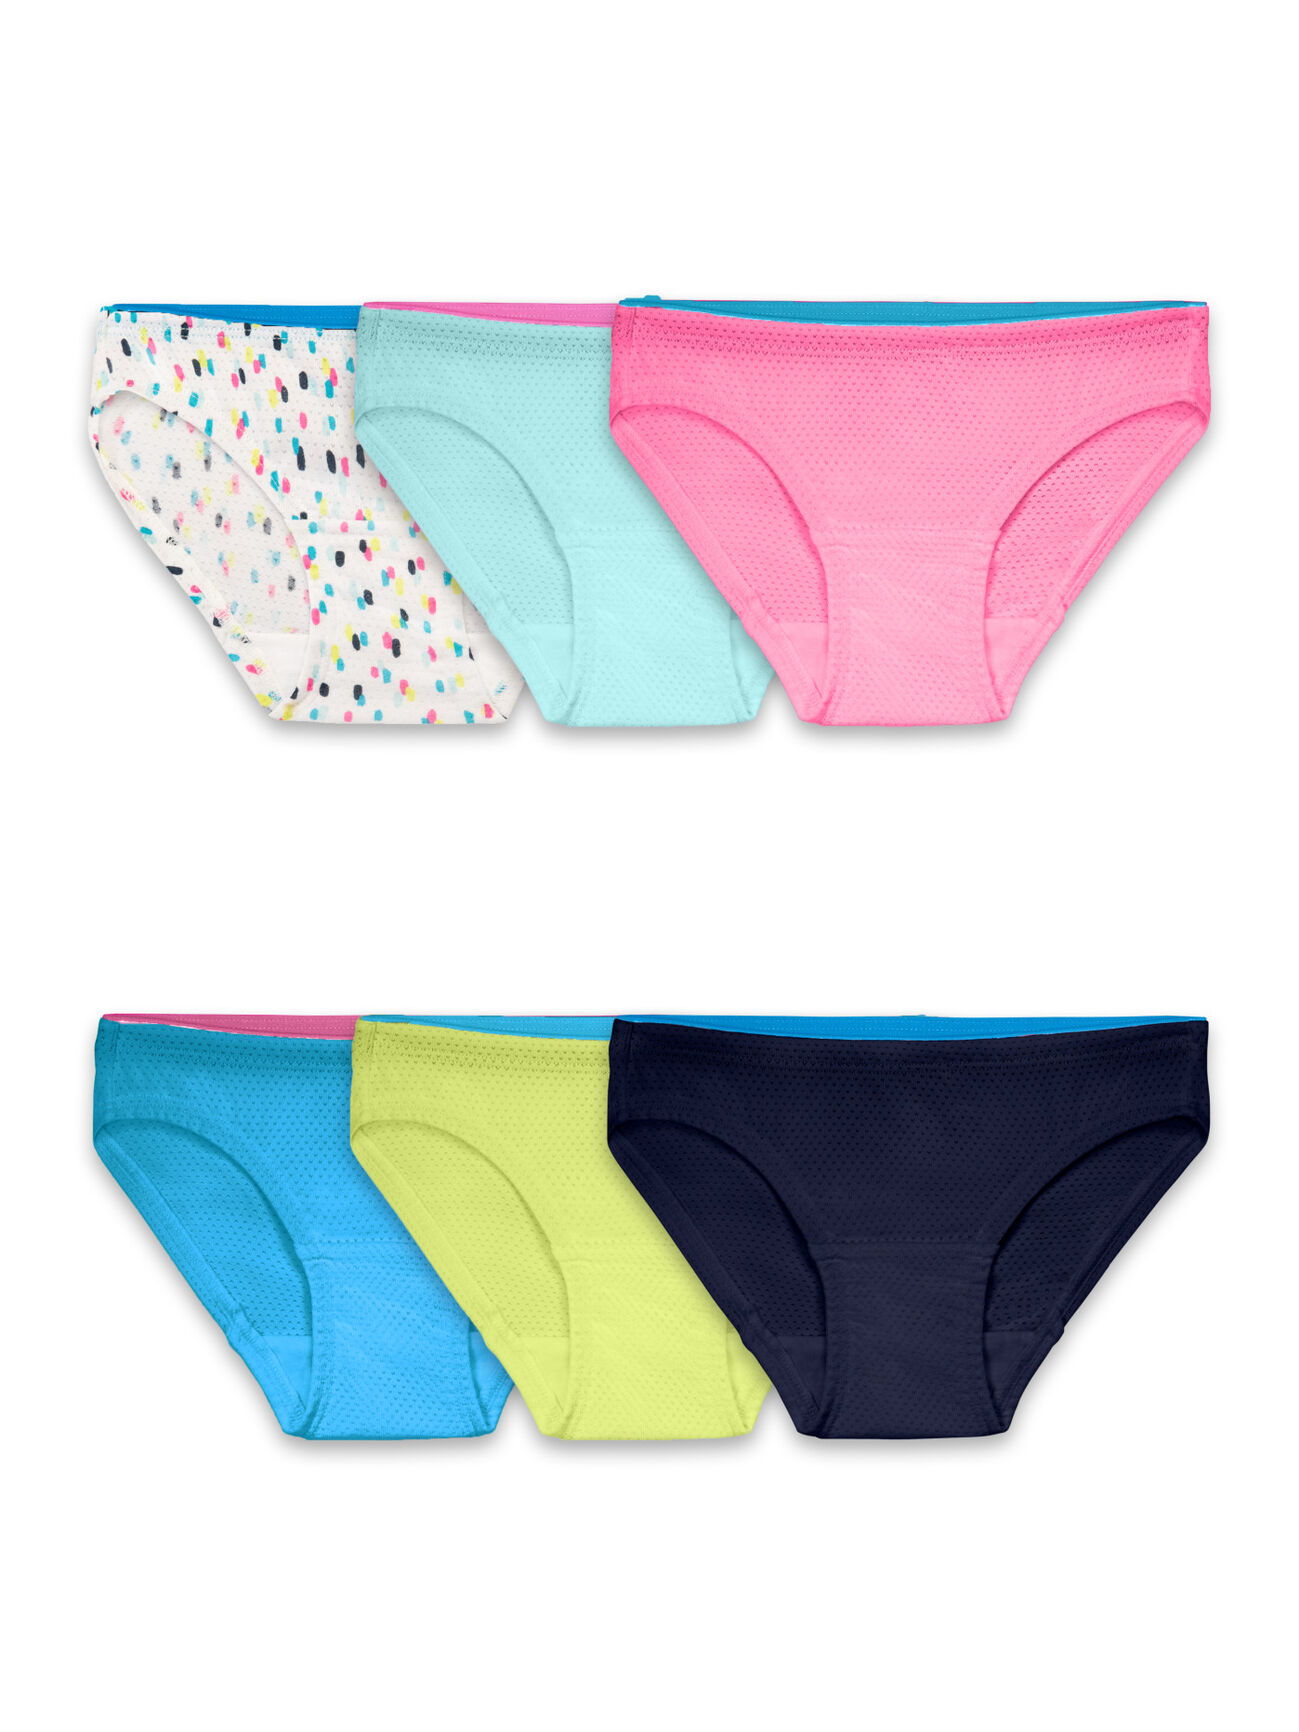  bebe Girls Underwear- 10 Pack 100% Cotton Bikini